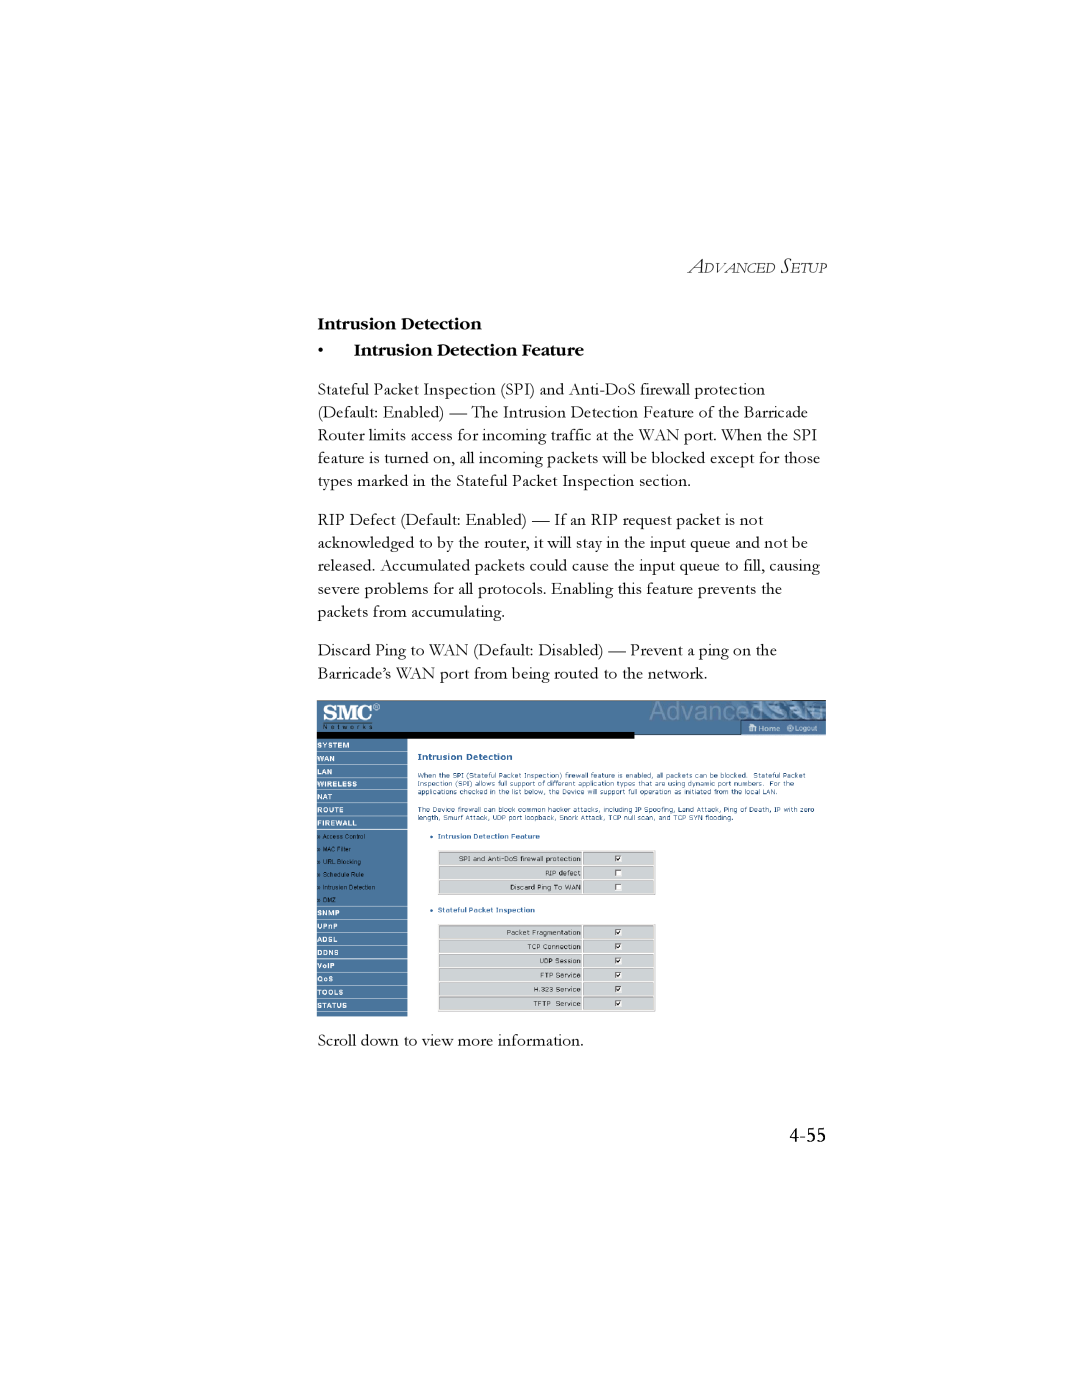 SMC Networks SMC7908VoWBRA manual 4-55, Intrusion Detection Intrusion Detection Feature 